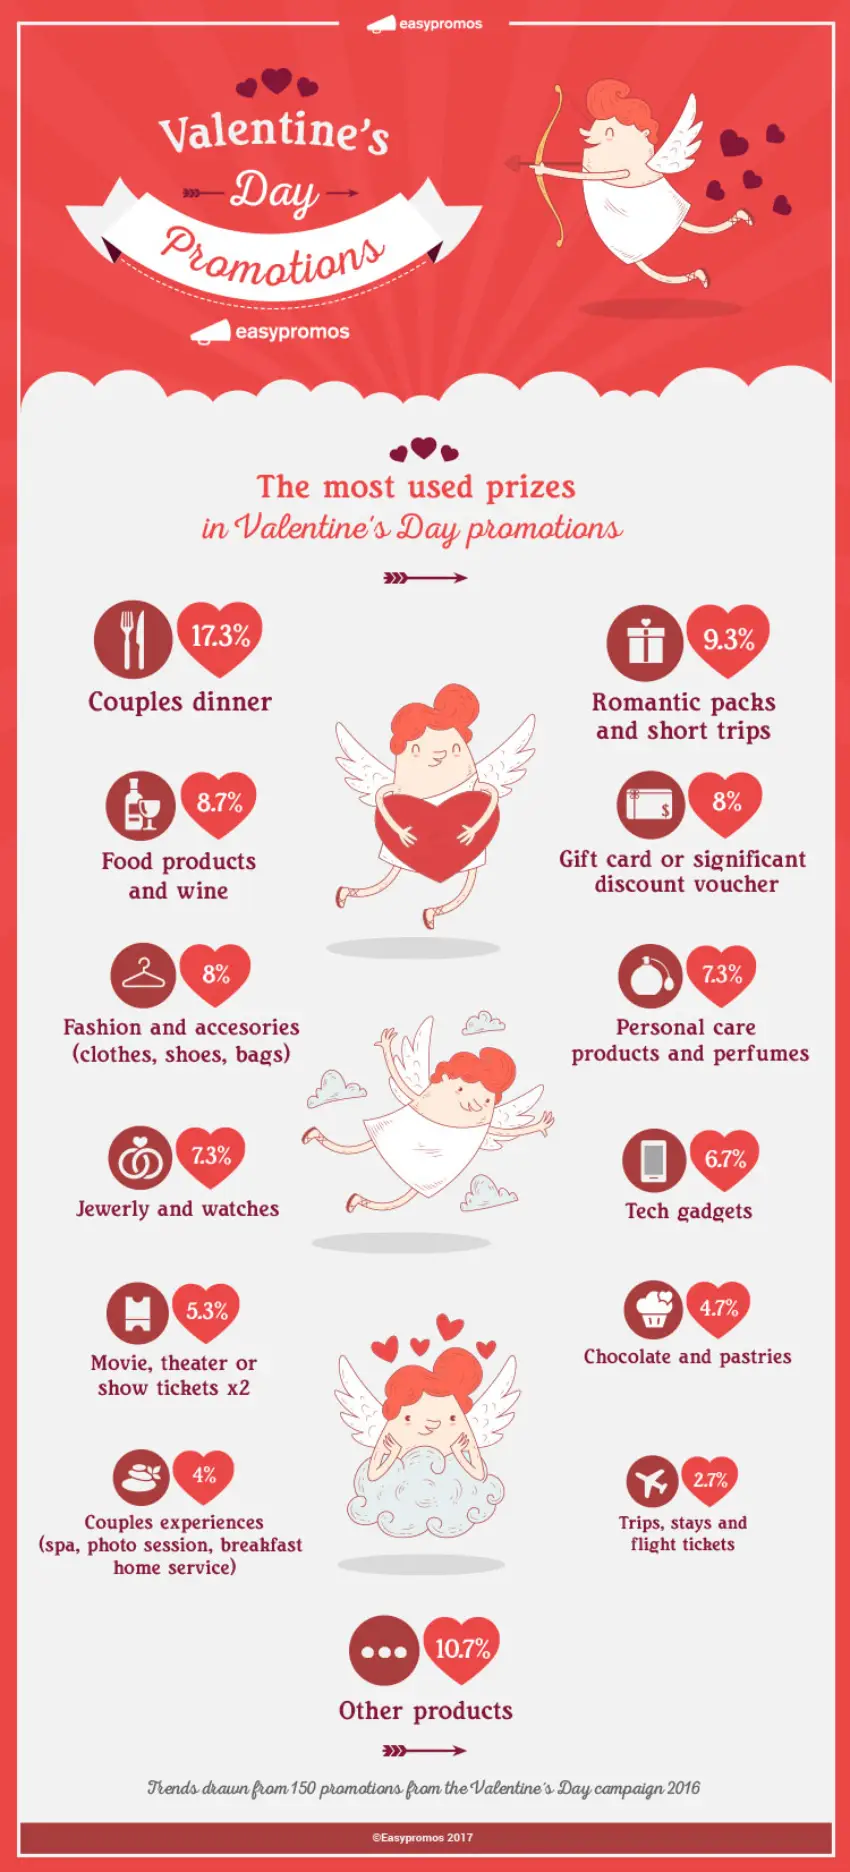 Valentine's Day promotion prizes